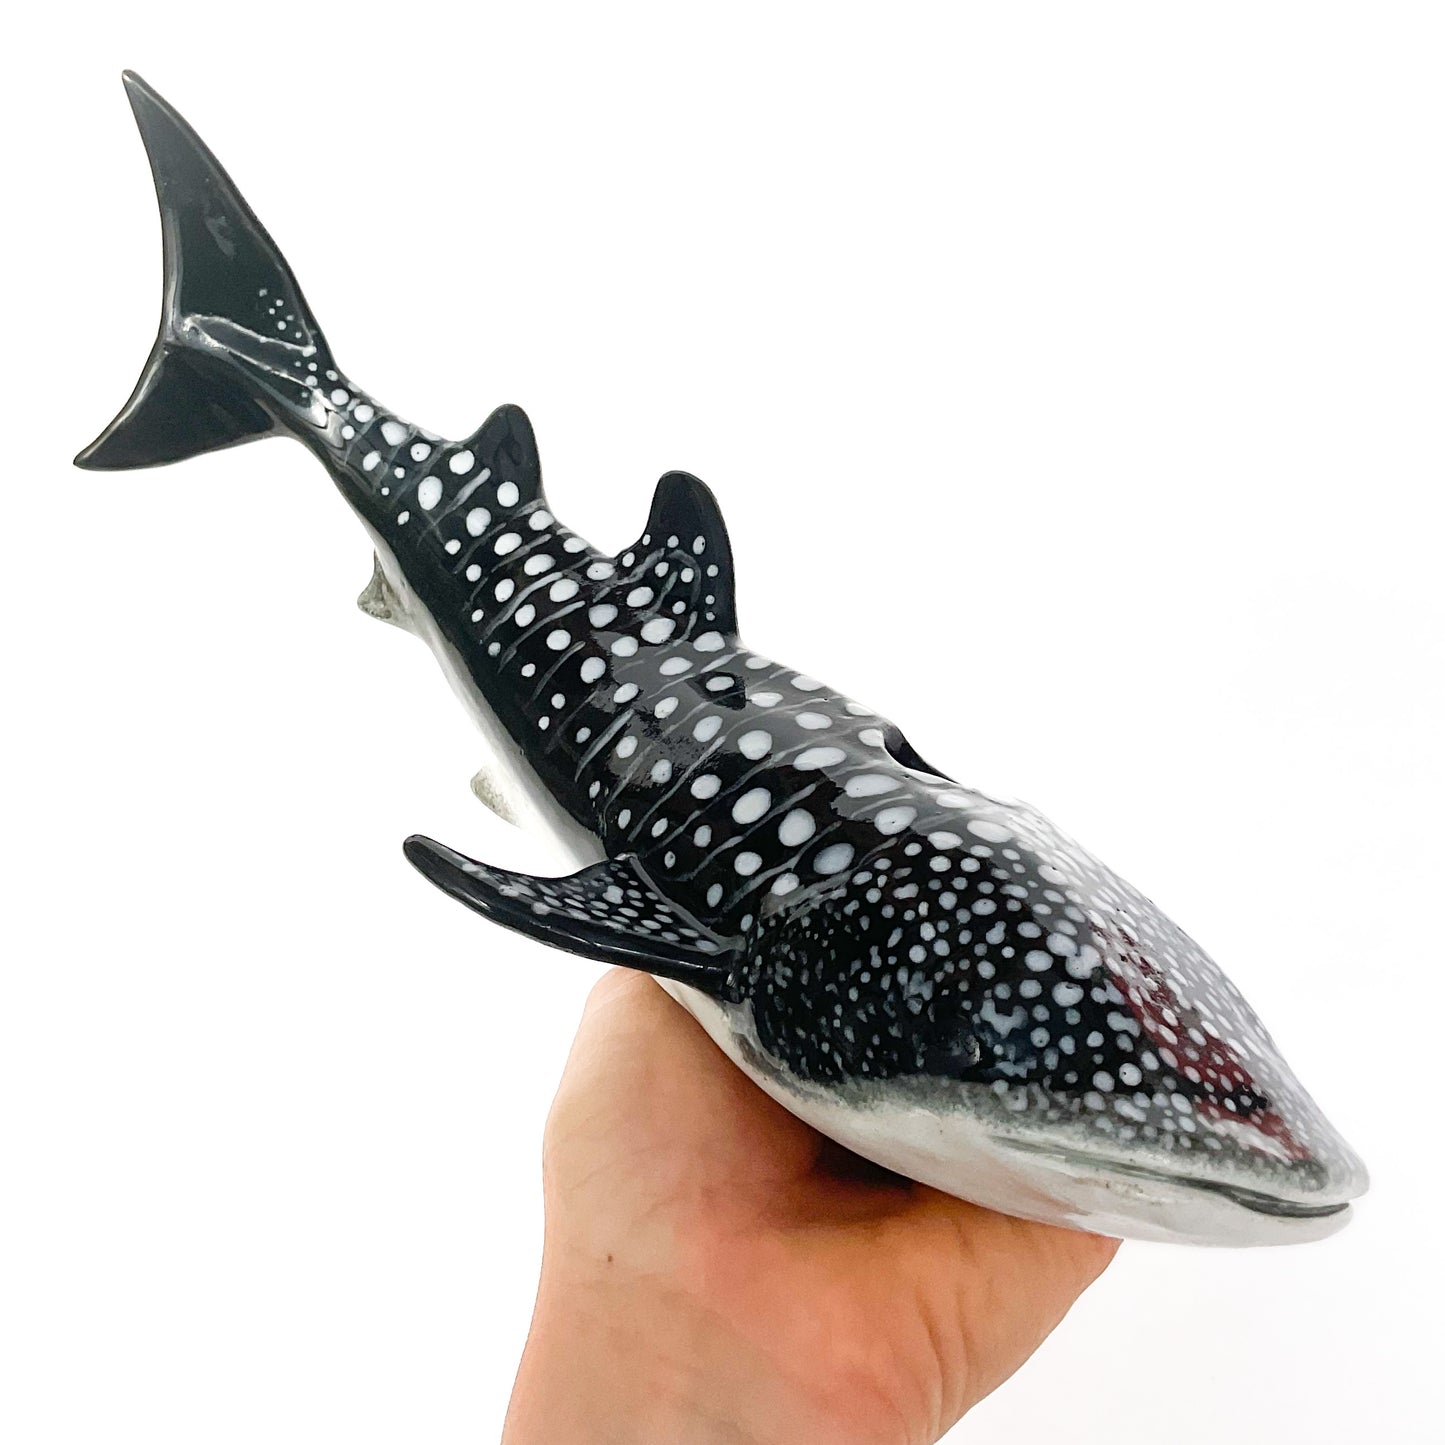 Whale Shark Ceramic Candlestick Holder